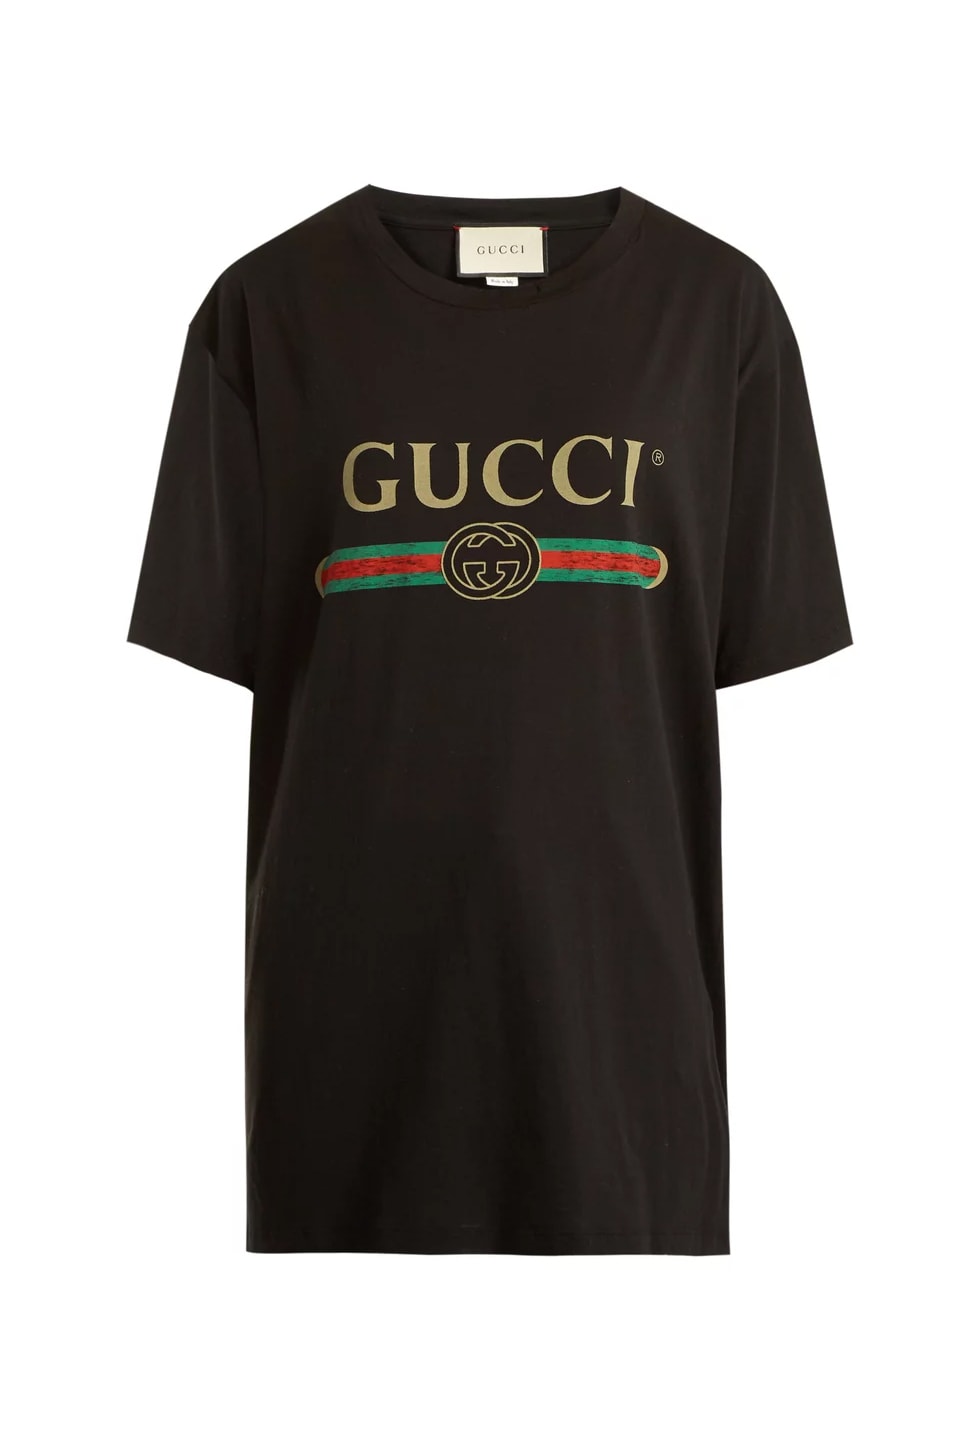 Gucci Restocks Black Vintage Logo Tee